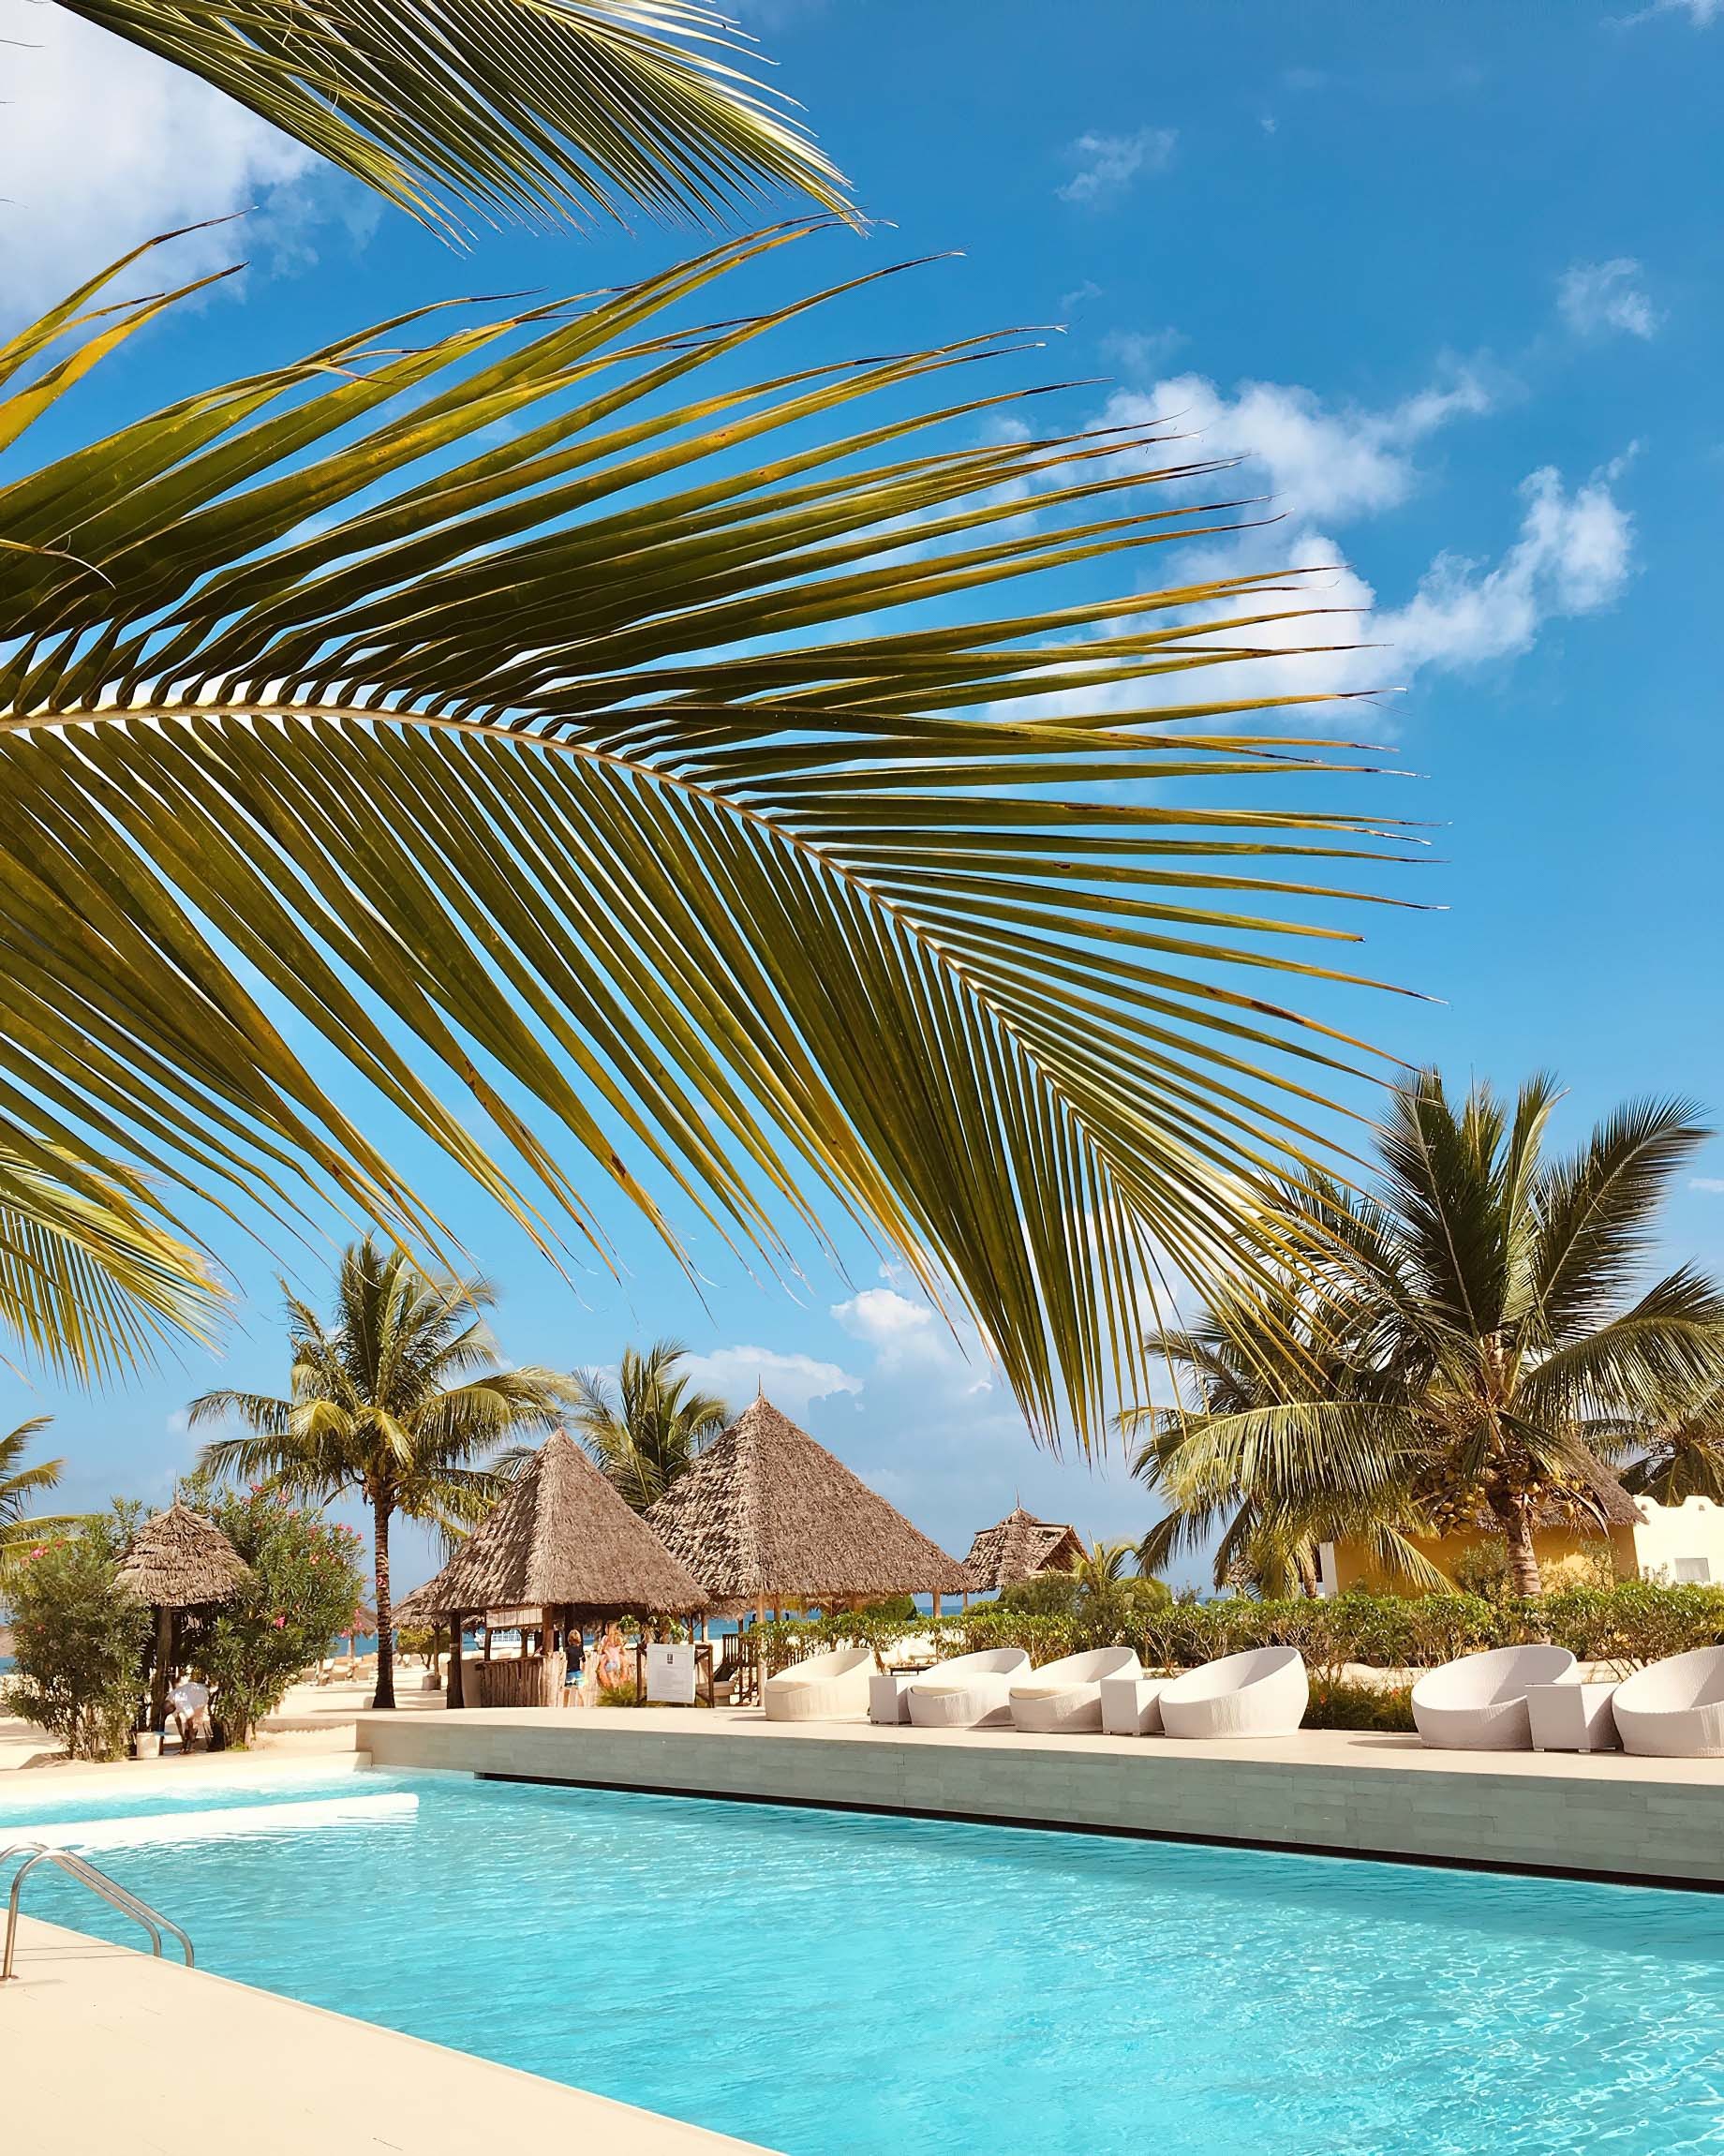 Gold Zanzibar Beach House And Spa Resort Nungwi Zanzibar Tanzania Pool Deck Travoh 